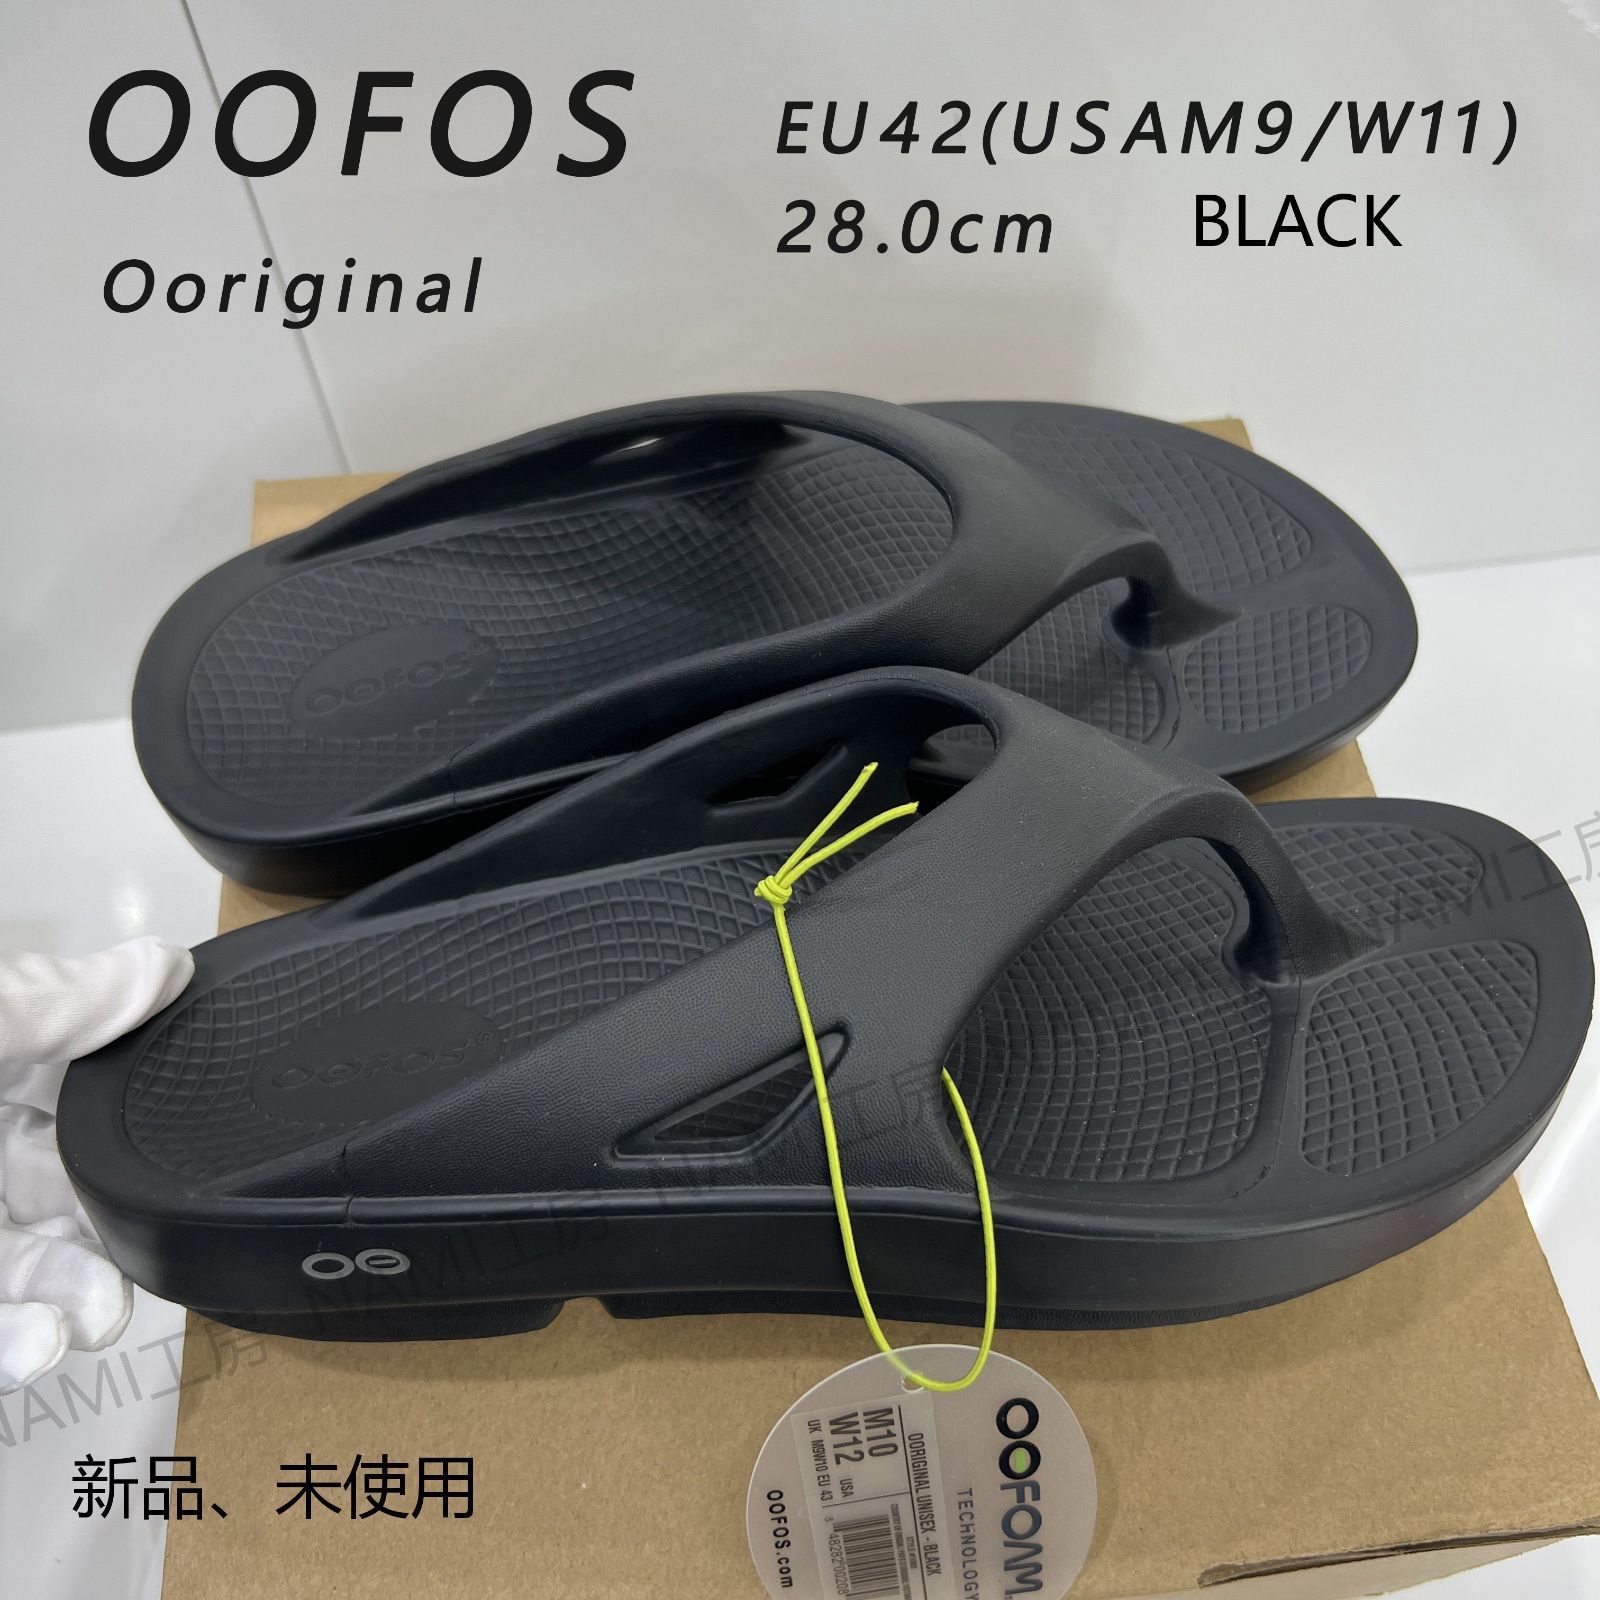 OOFOS Ooriginal ウーフォス オリジナル メンズ レディース男女通用